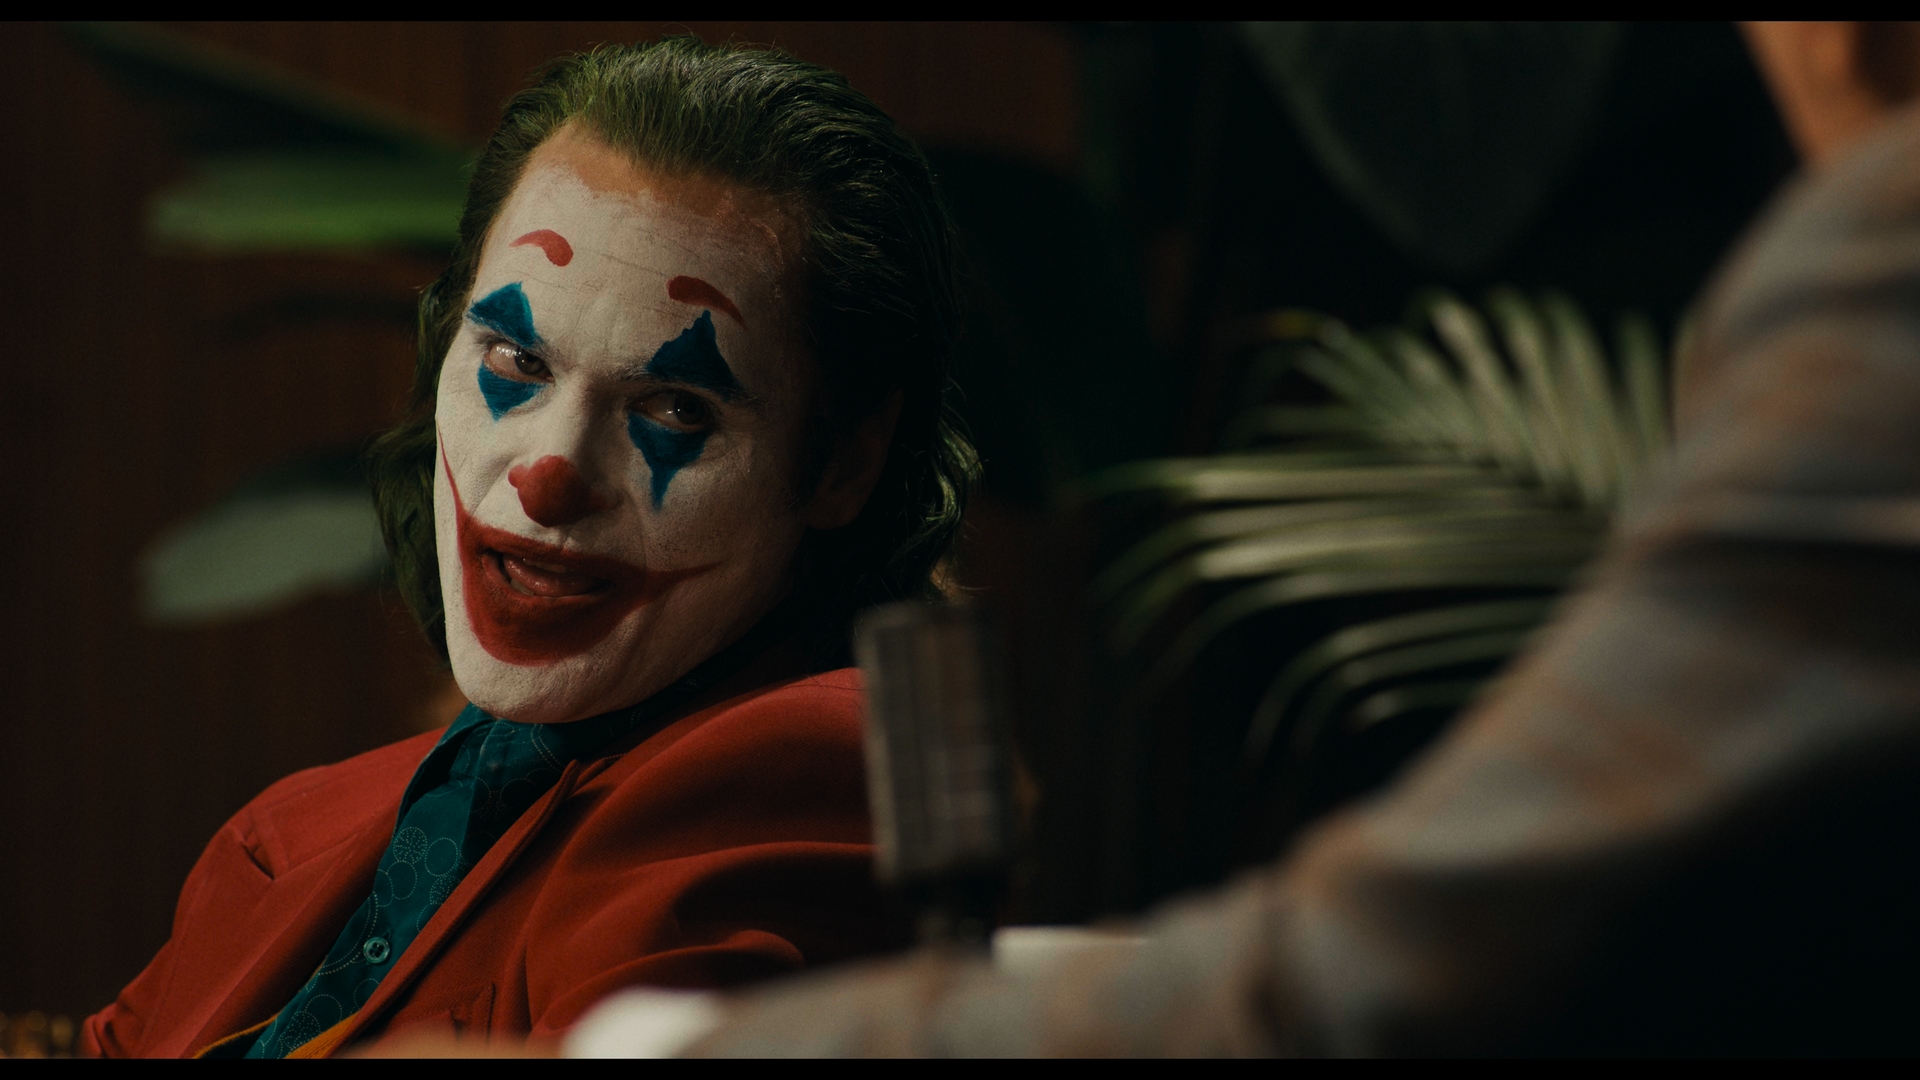 Joker Joaquin Phoenix Joker 2019 Movie DC Comics Makeup Clown Movies Film Stills 1920x1080